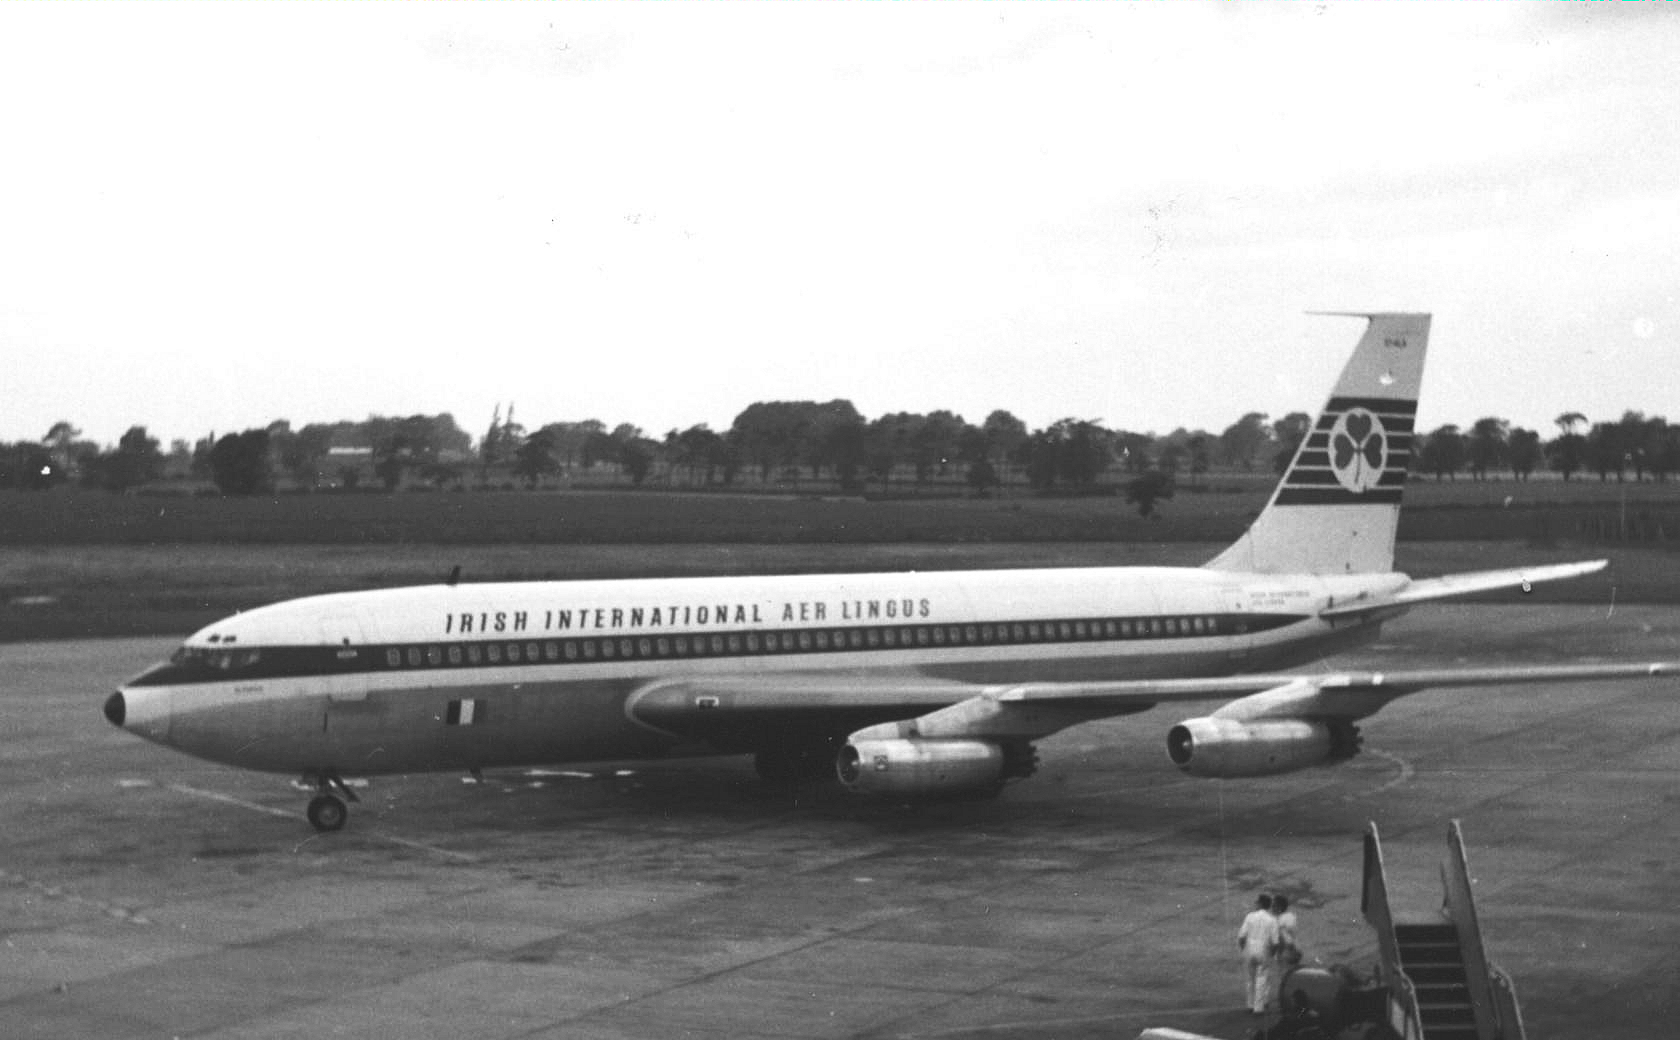 Boeing 720 previous